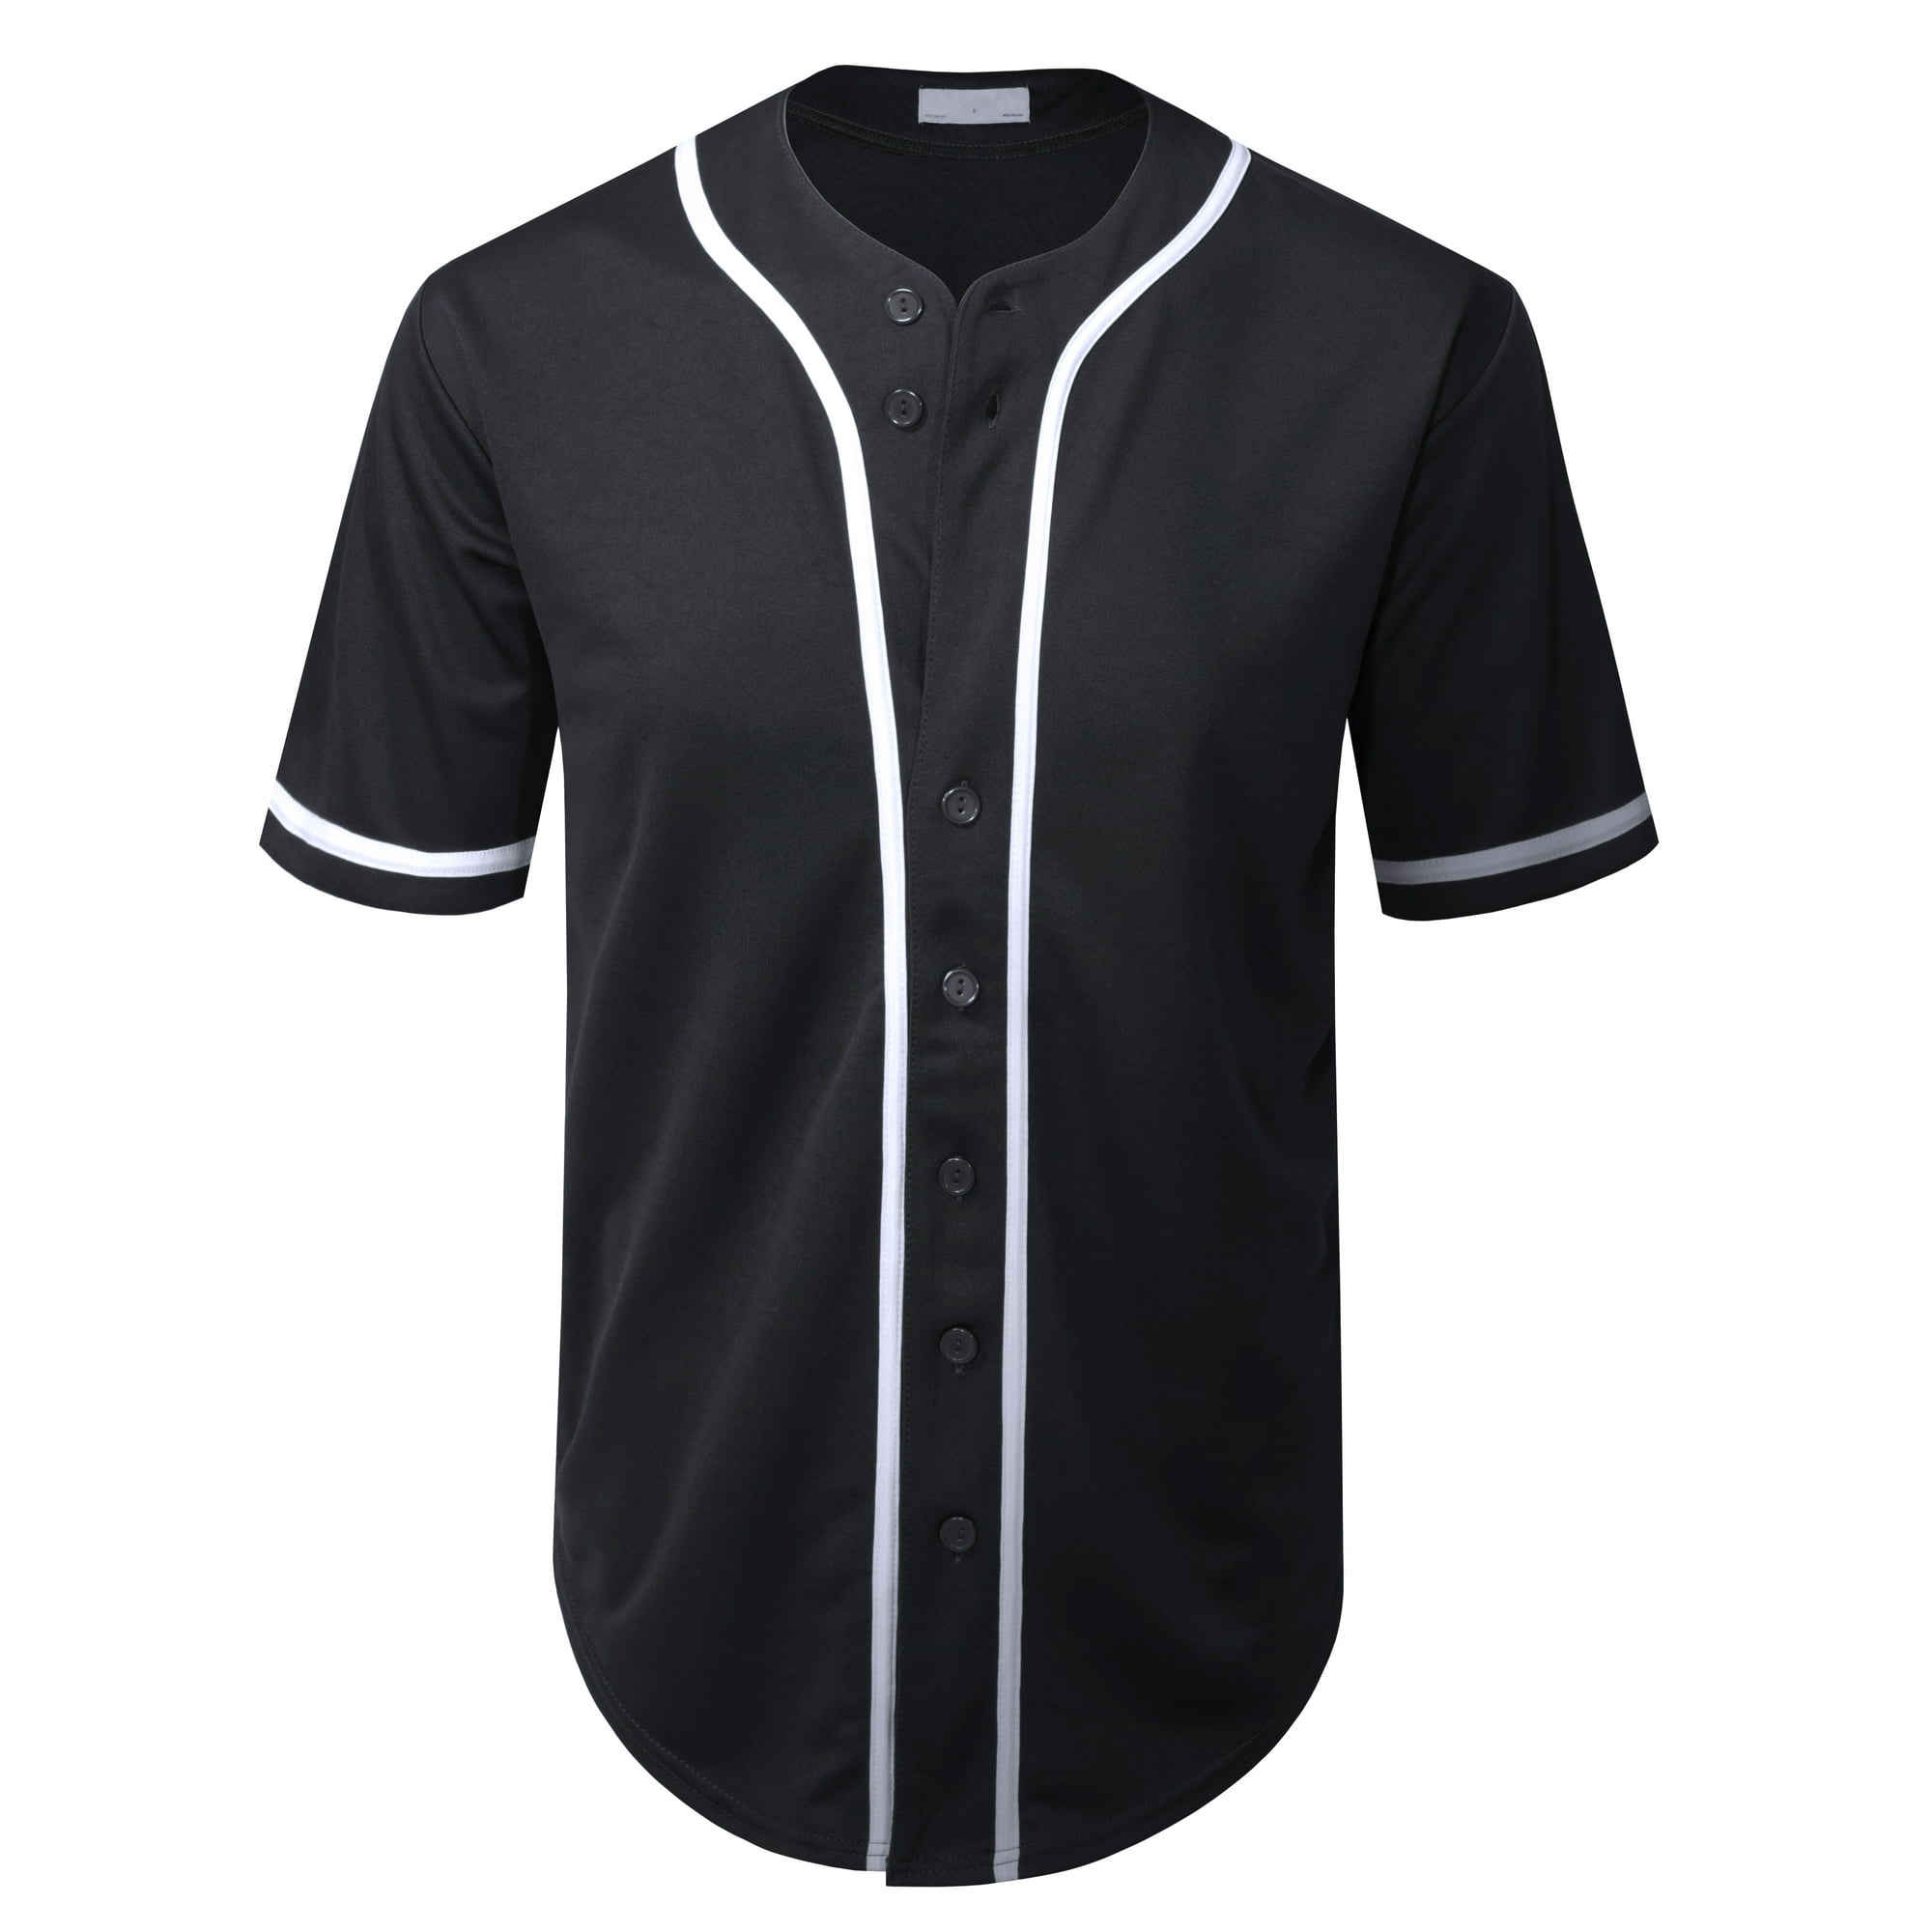 Men's Black Blank Baseball Jersey, Retro Classic Baseball Shirt